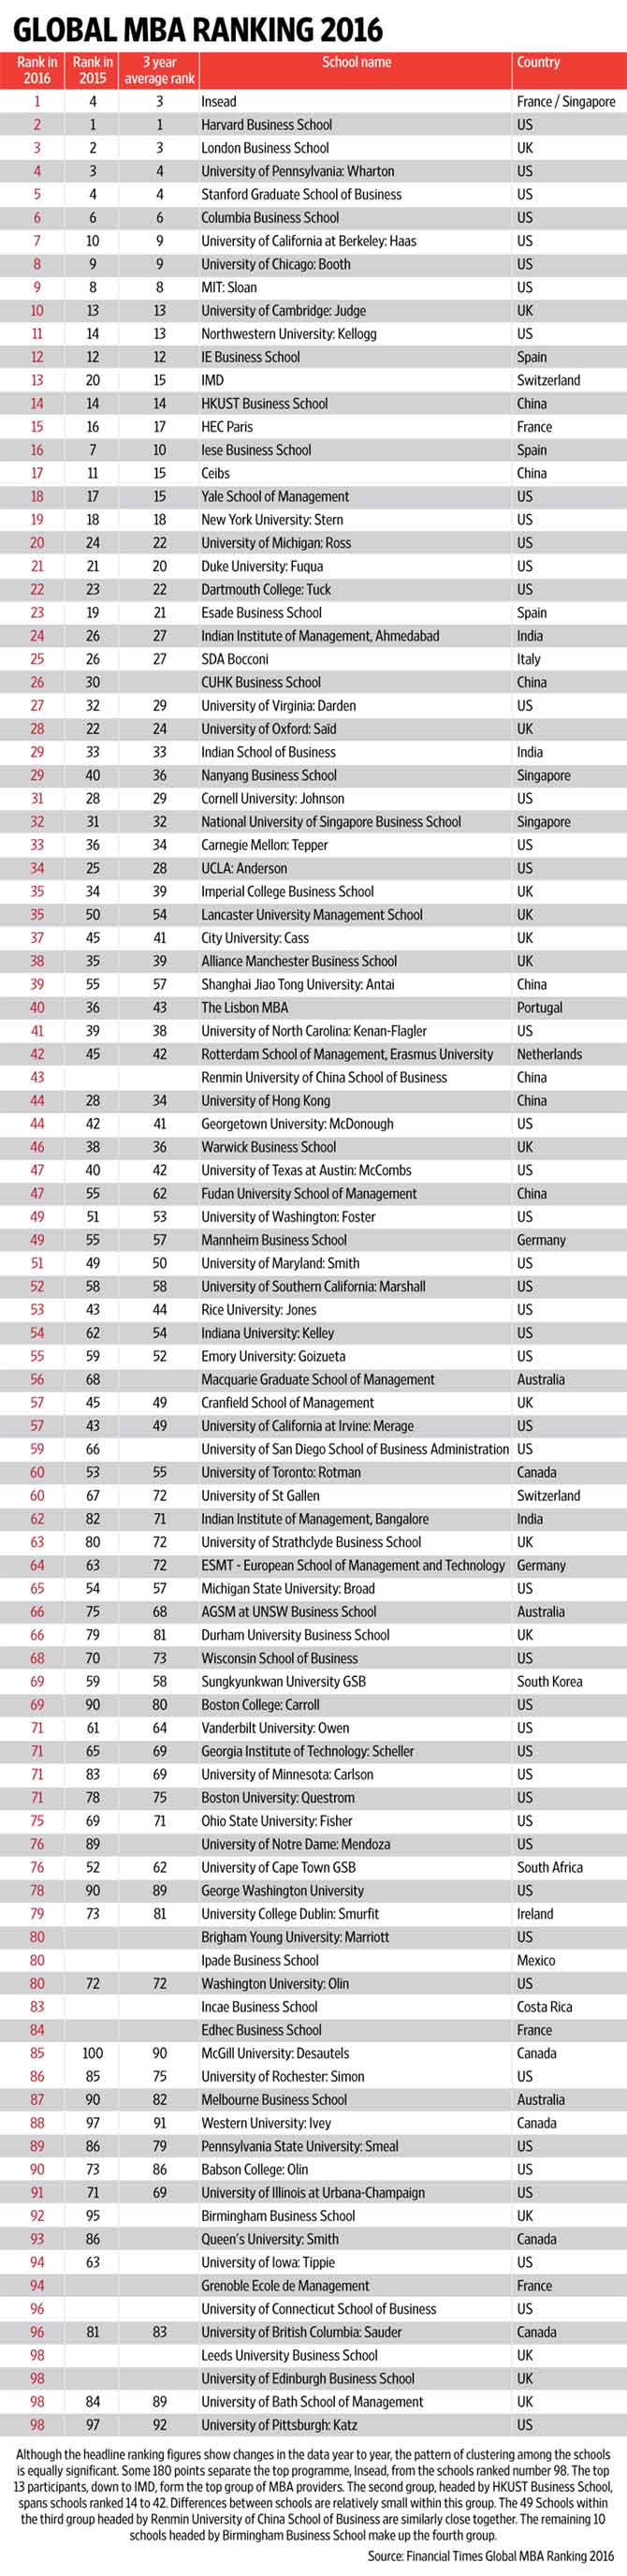 Insead tops FT MBA rankings. 3 Indian b-schools in top 100 - Rediff.com